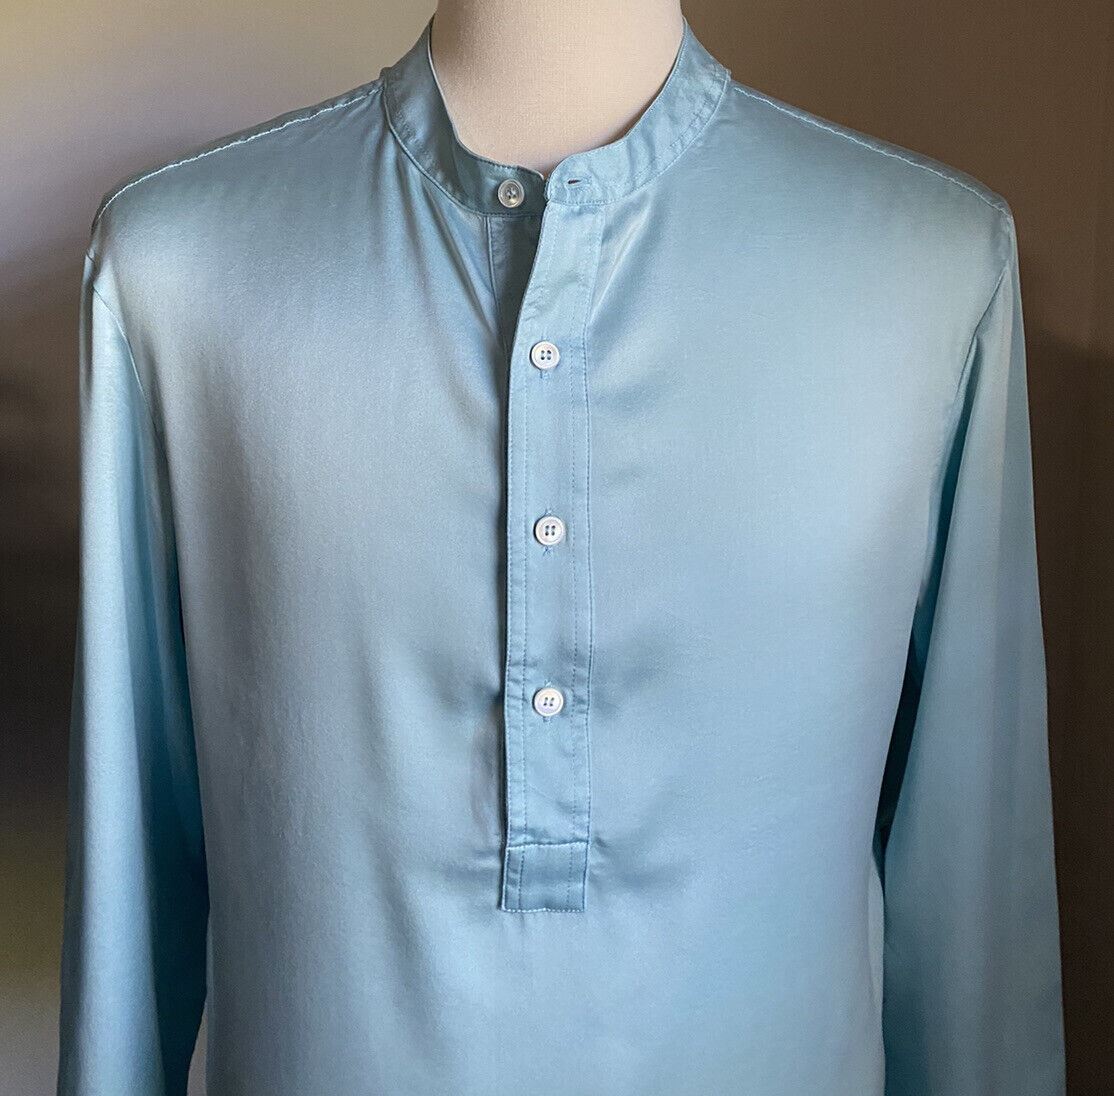 Neu mit Etikett: 790 $ TOM FORD Herren-Henley-Seidenhemd Blau Italien